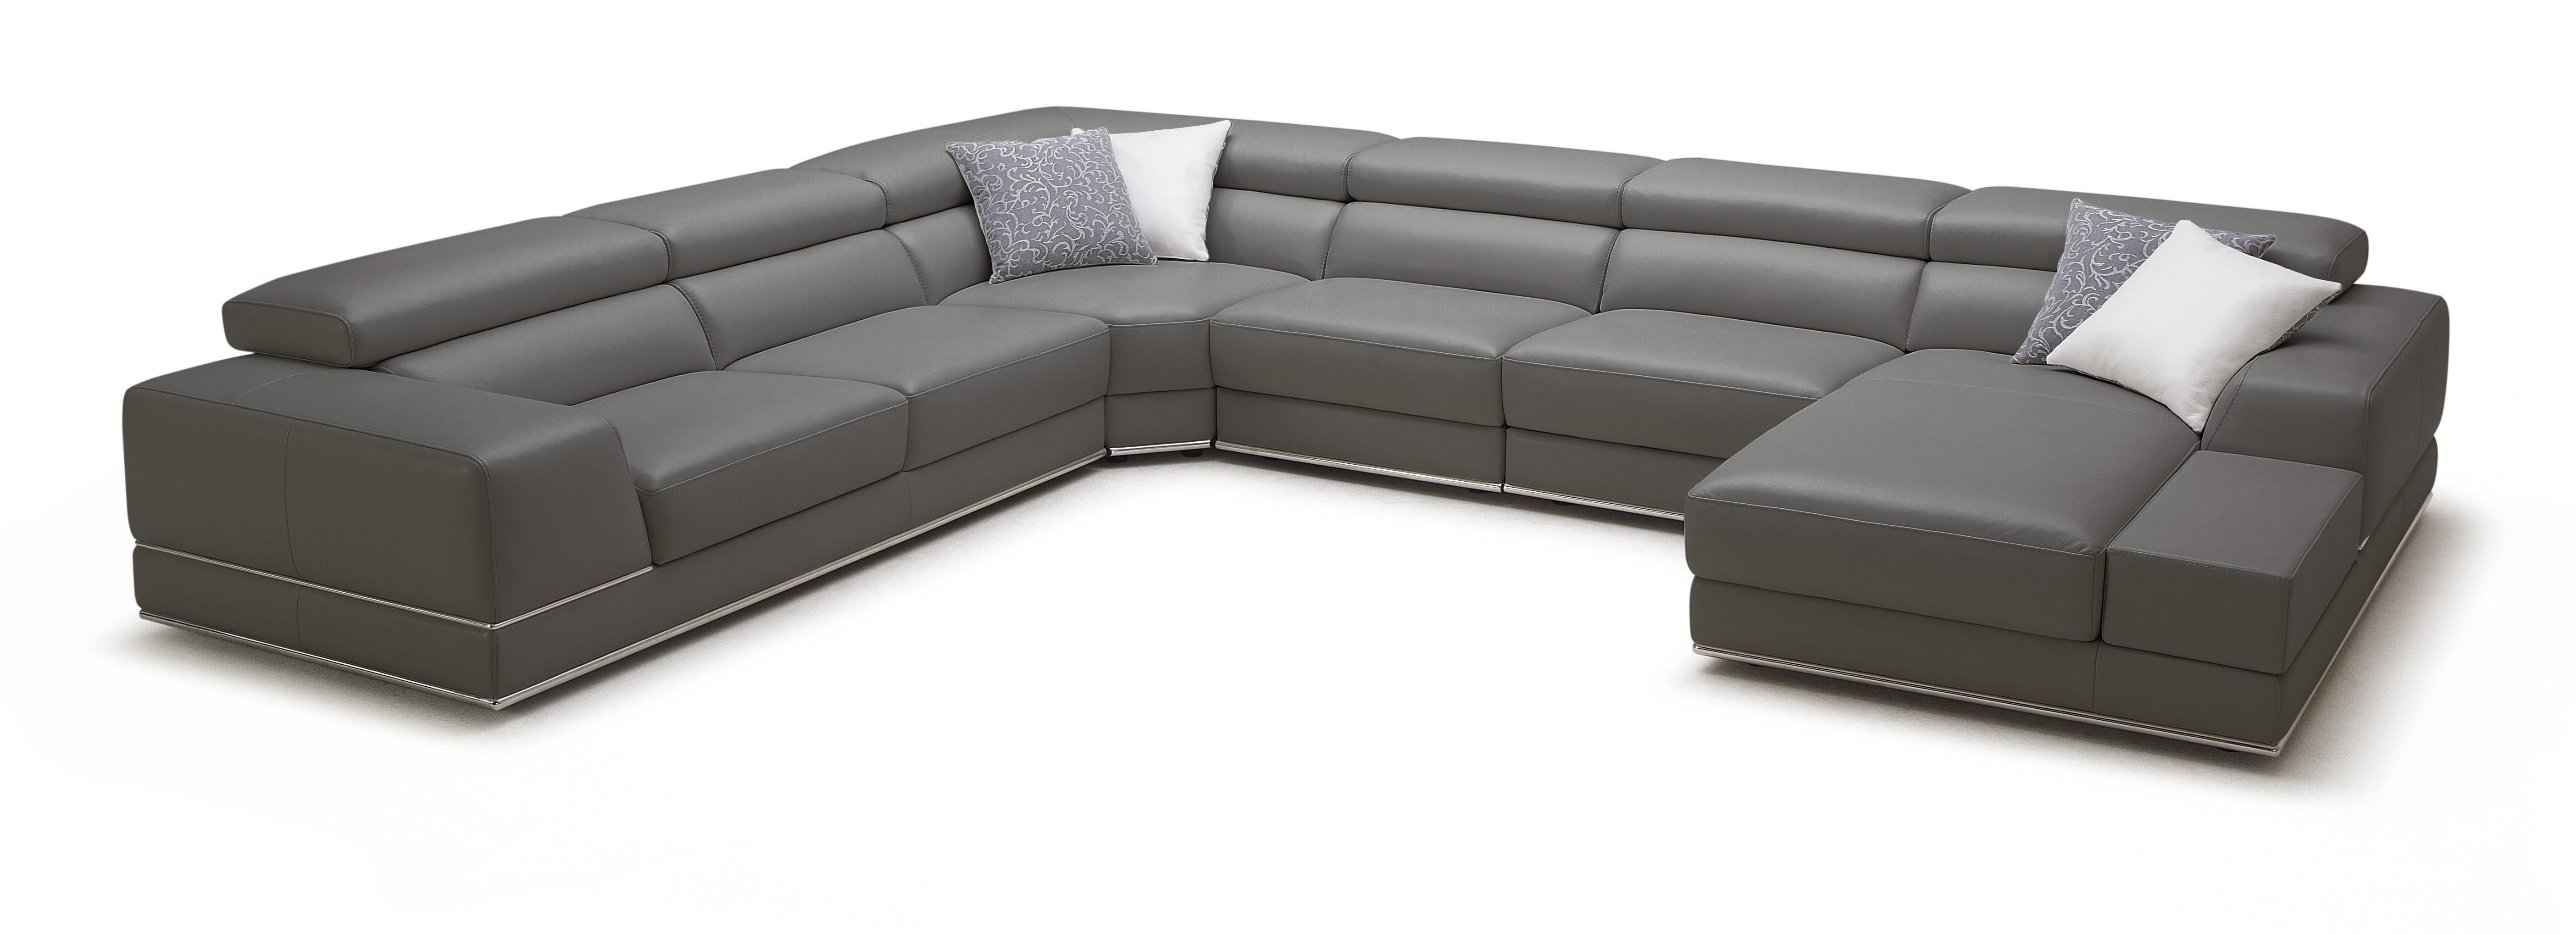 bergamo extended sectional leather modern sofa elephant gray